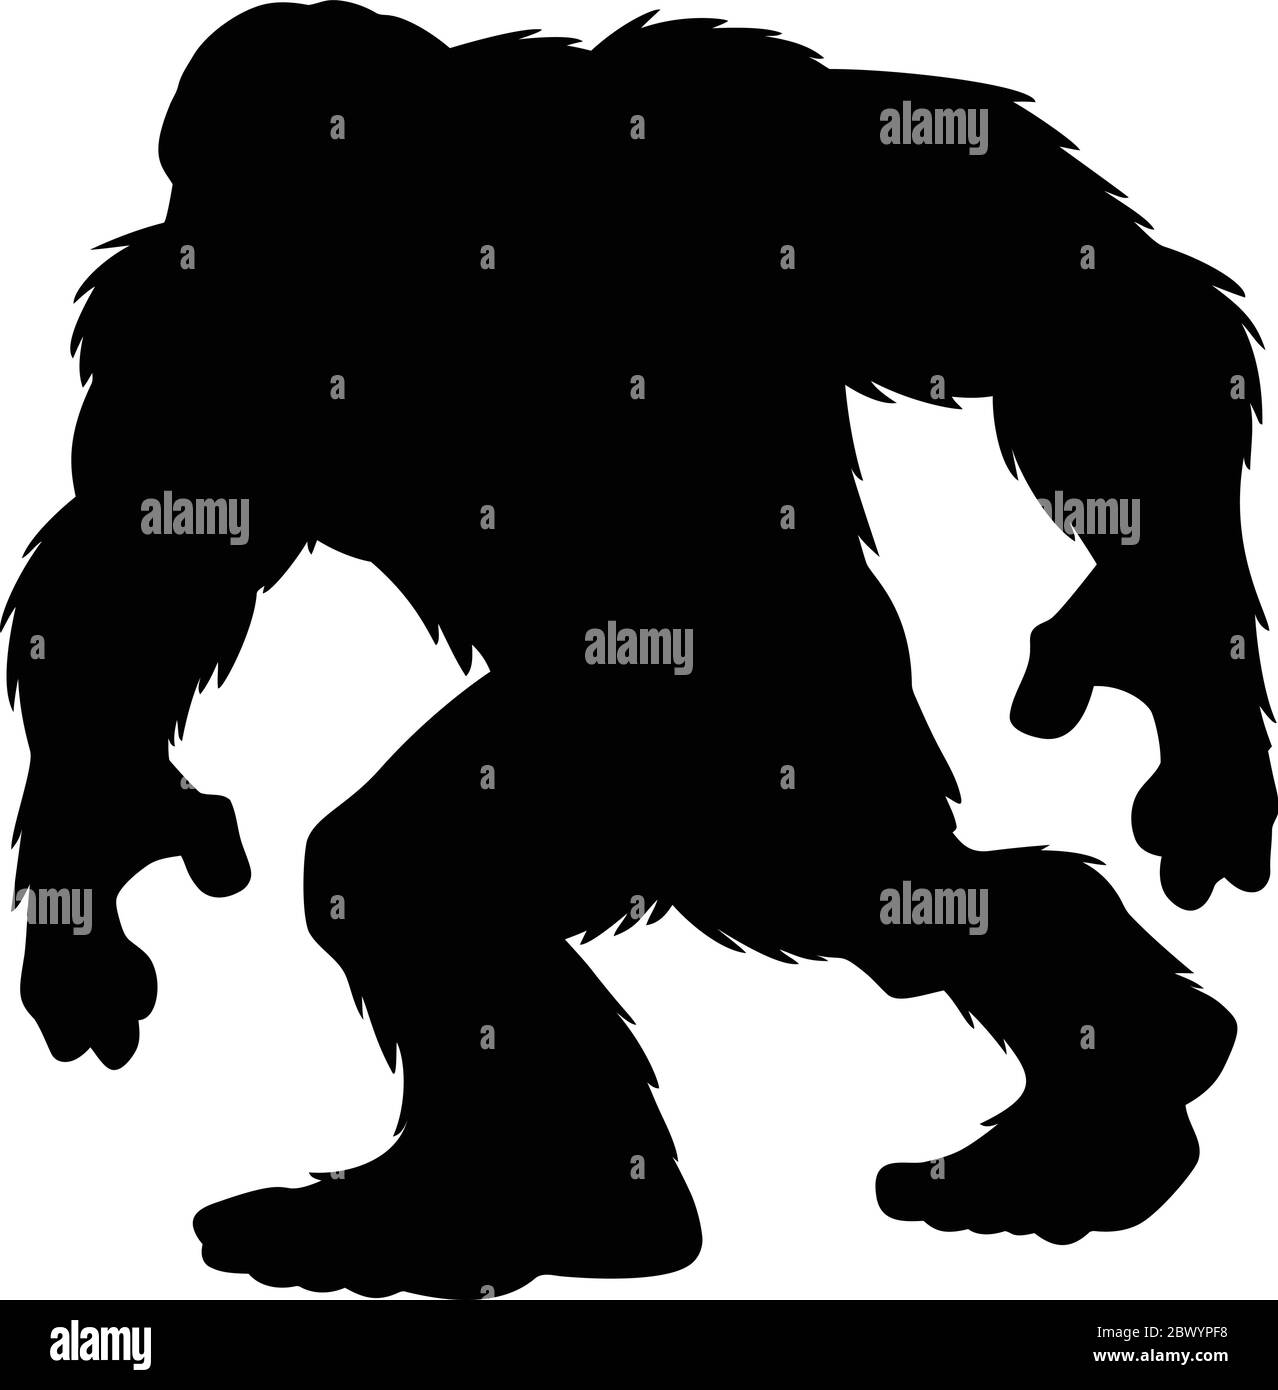 Bigfoot Mascot Silhouette - EINE Cartoon-Illustration einer Bigfoot Mascot Silhouette. Stock Vektor